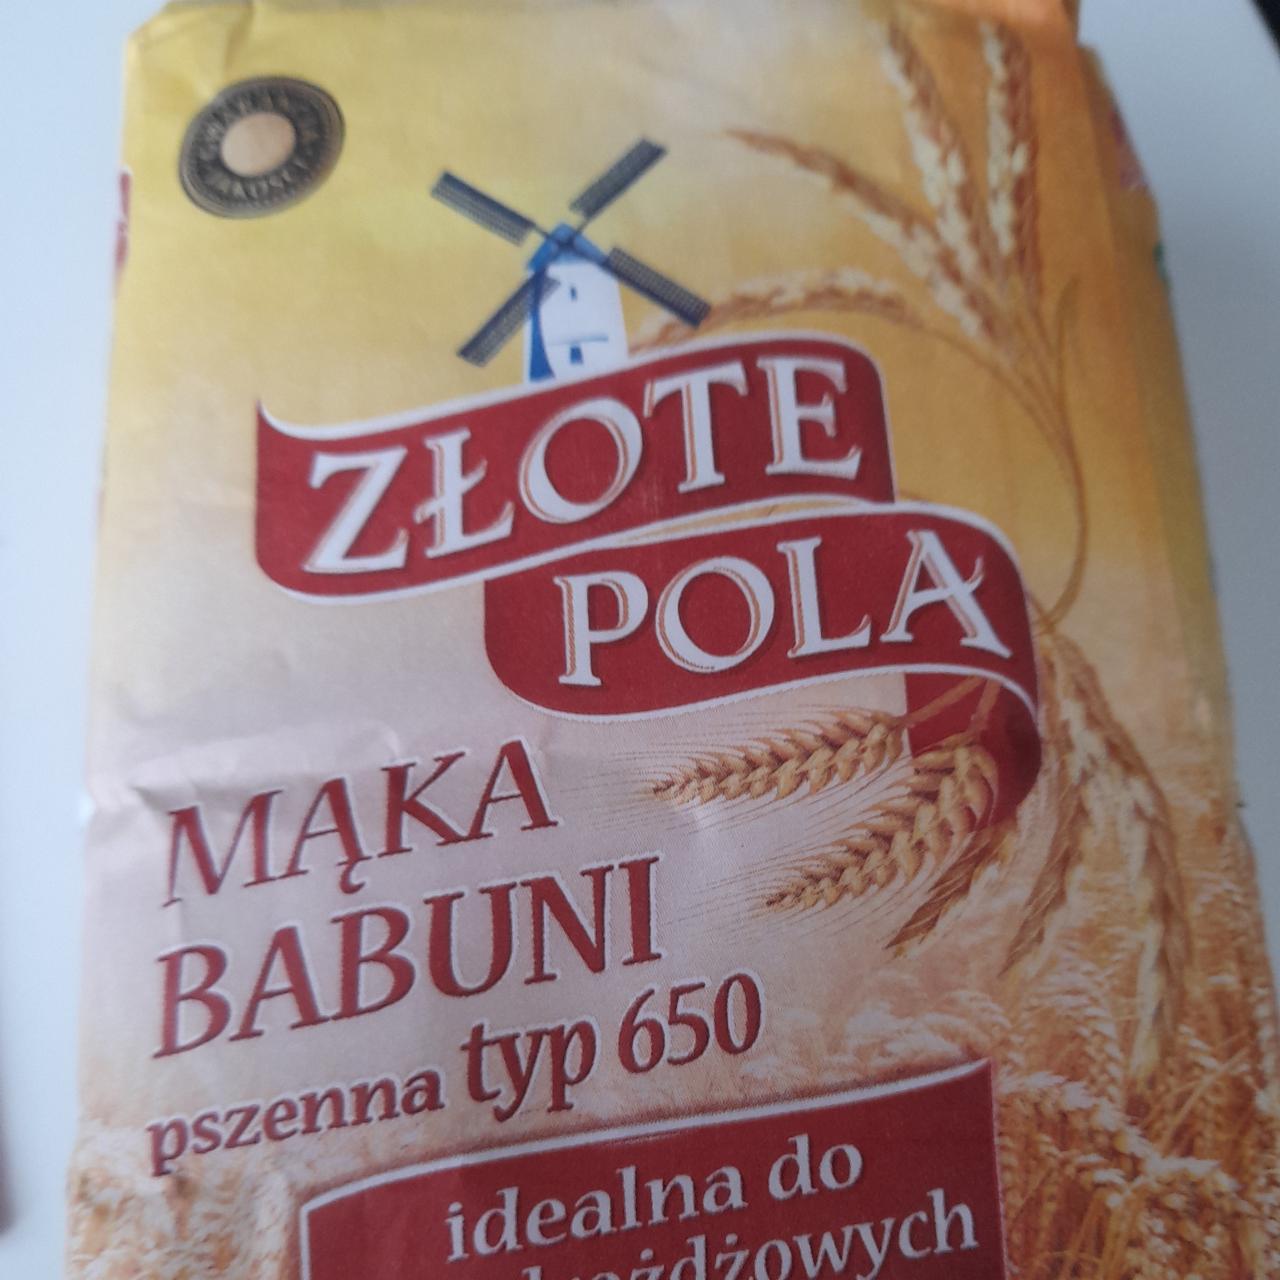 Фото - мука пшеничная Maka Babuni Zlote pola